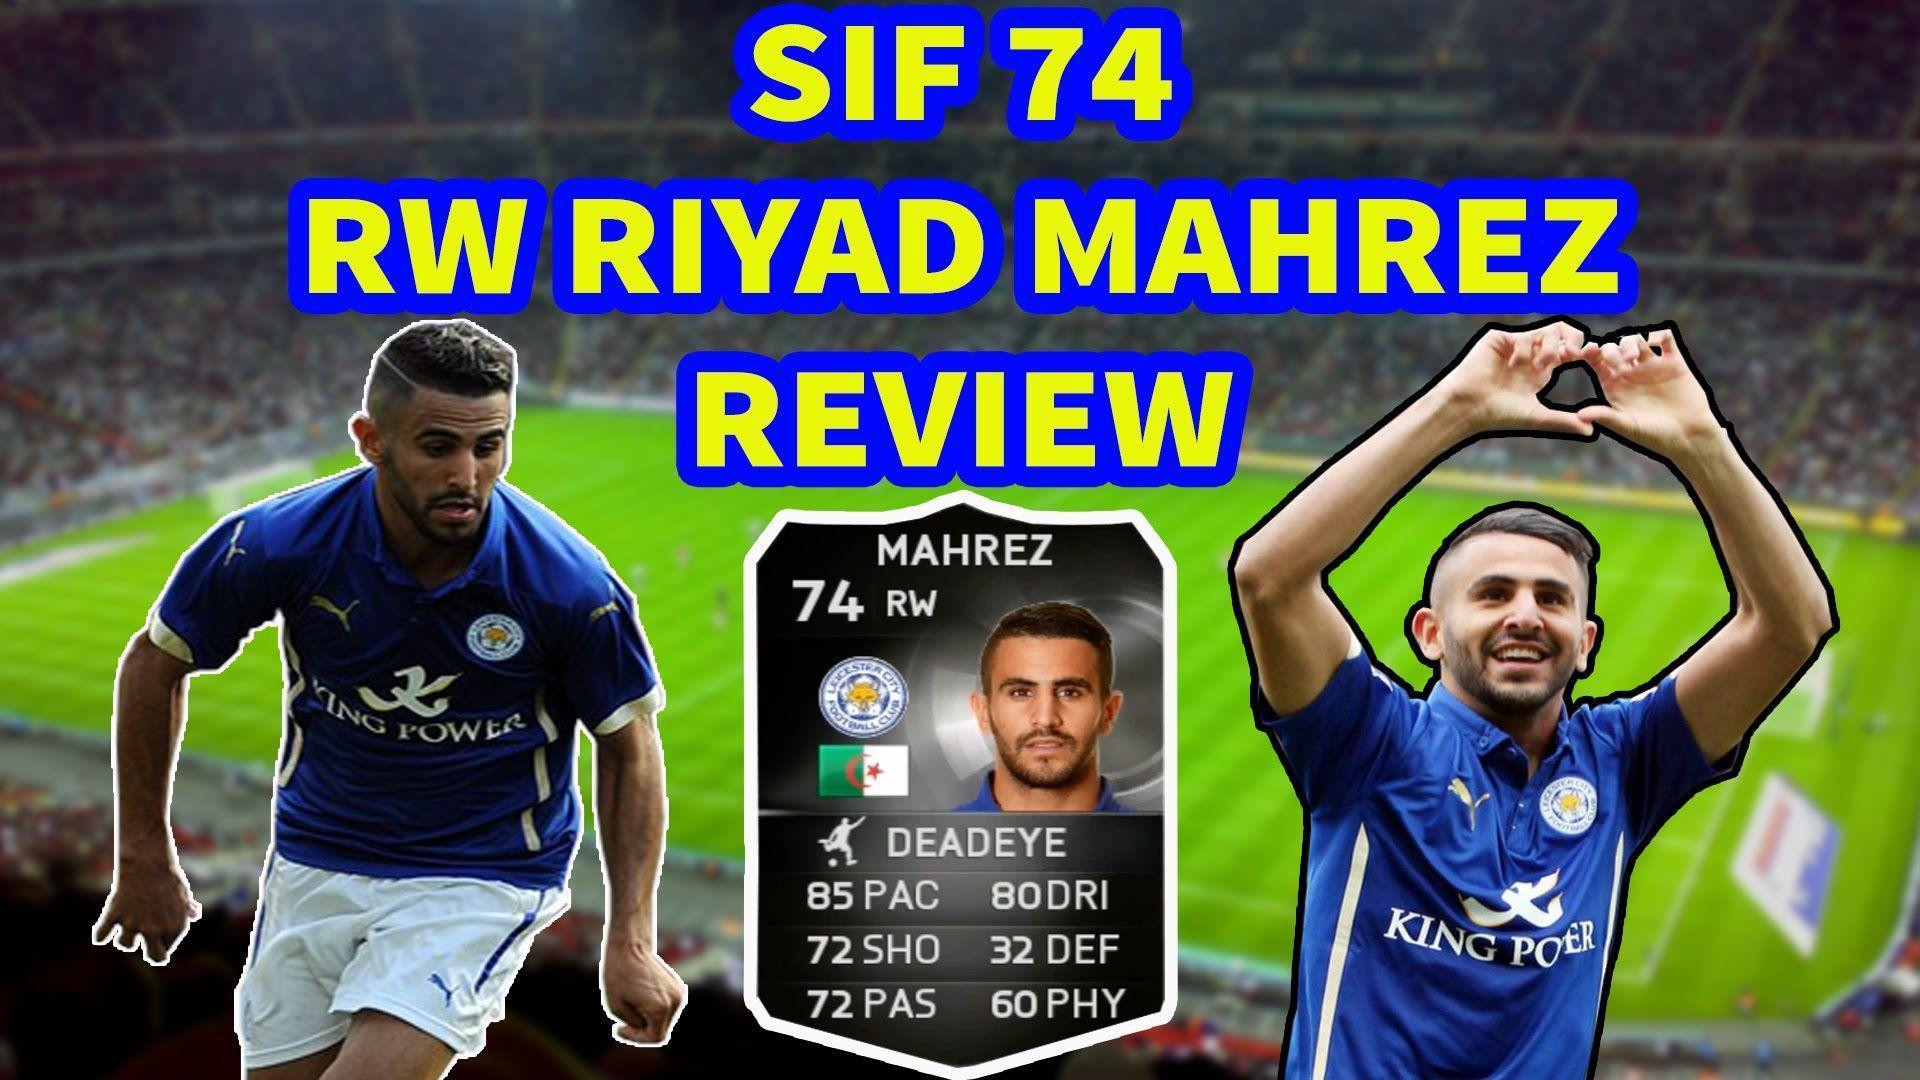 FIFA 15 PLAYER REVIEW. SIF 74 RW RIYAD MAHREZ